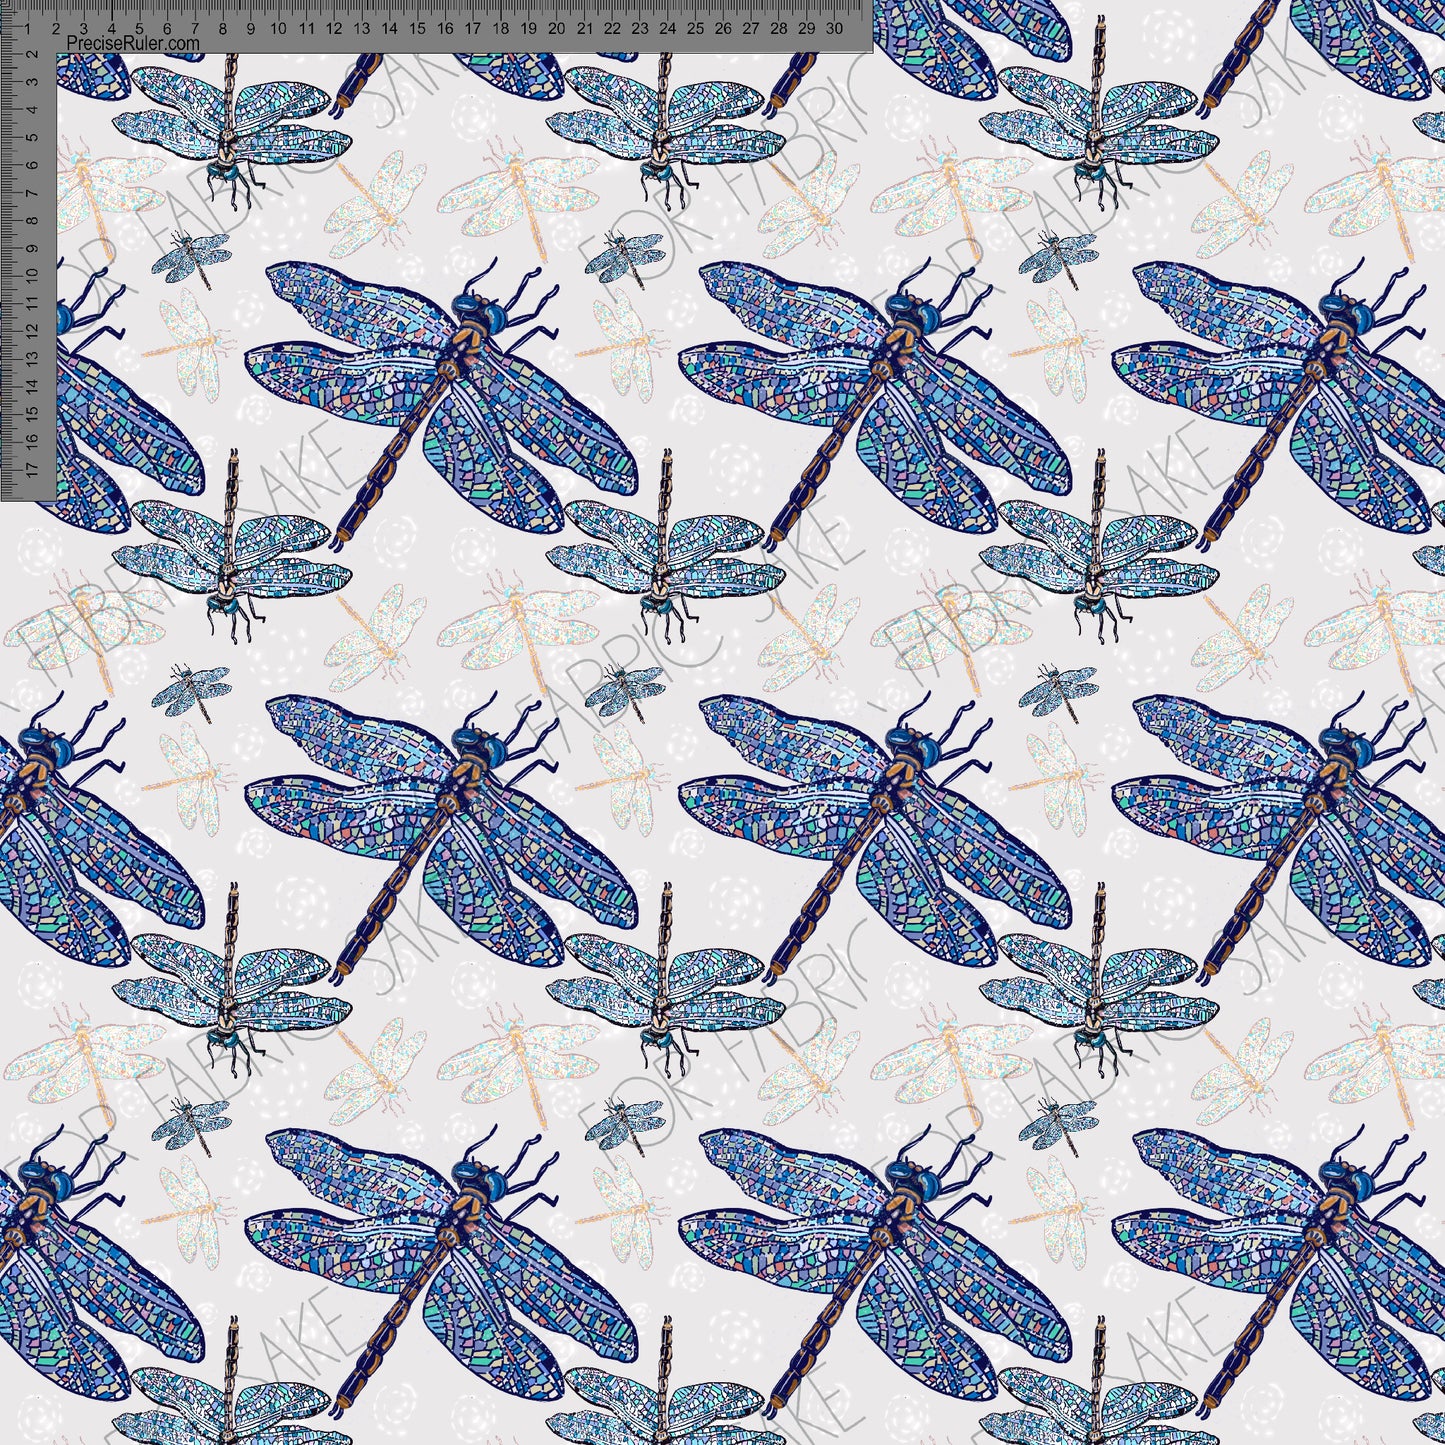 Load image into Gallery viewer, Dragonflies on grey - Sarah McAlpine Art- Custom Pre Order
